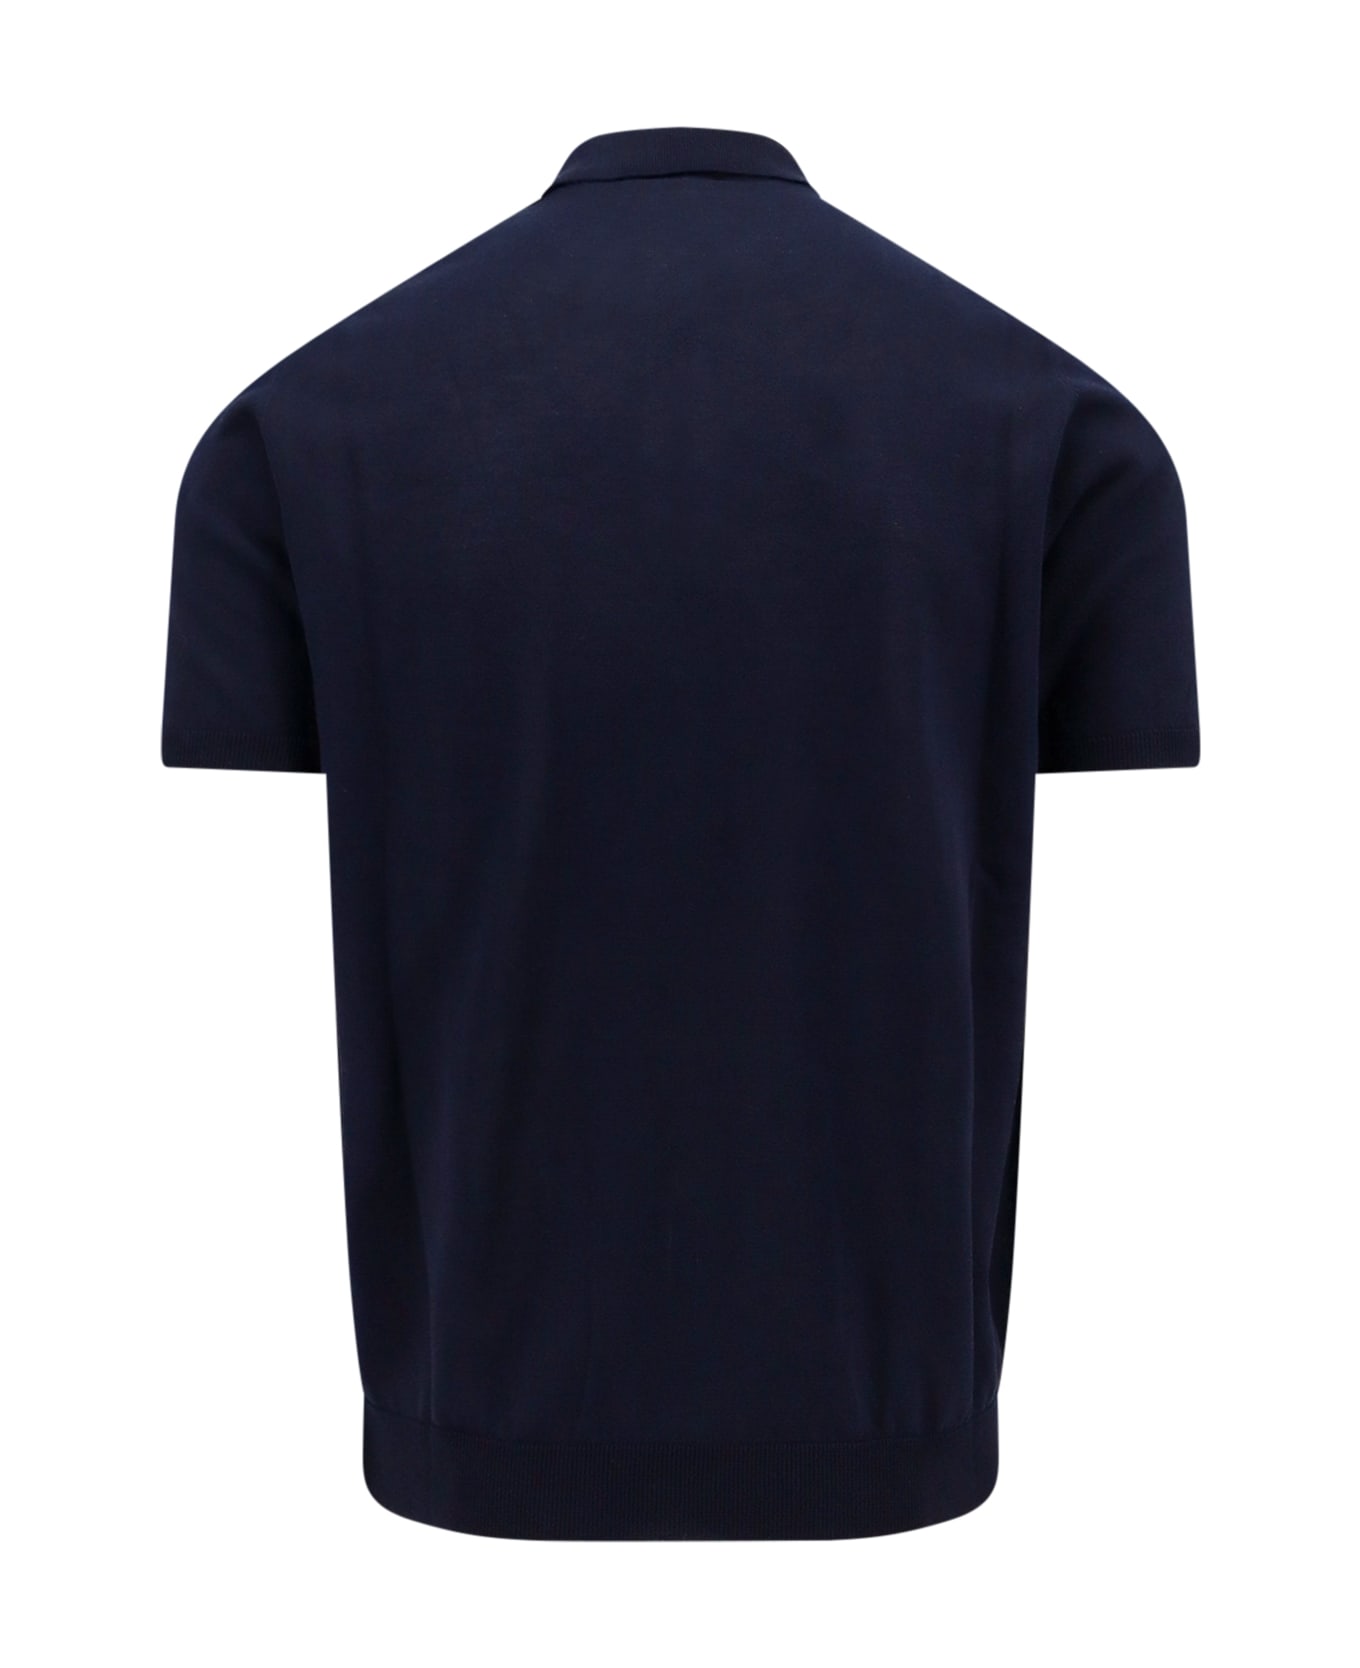 Roberto Collina Polo Shirt - Blue